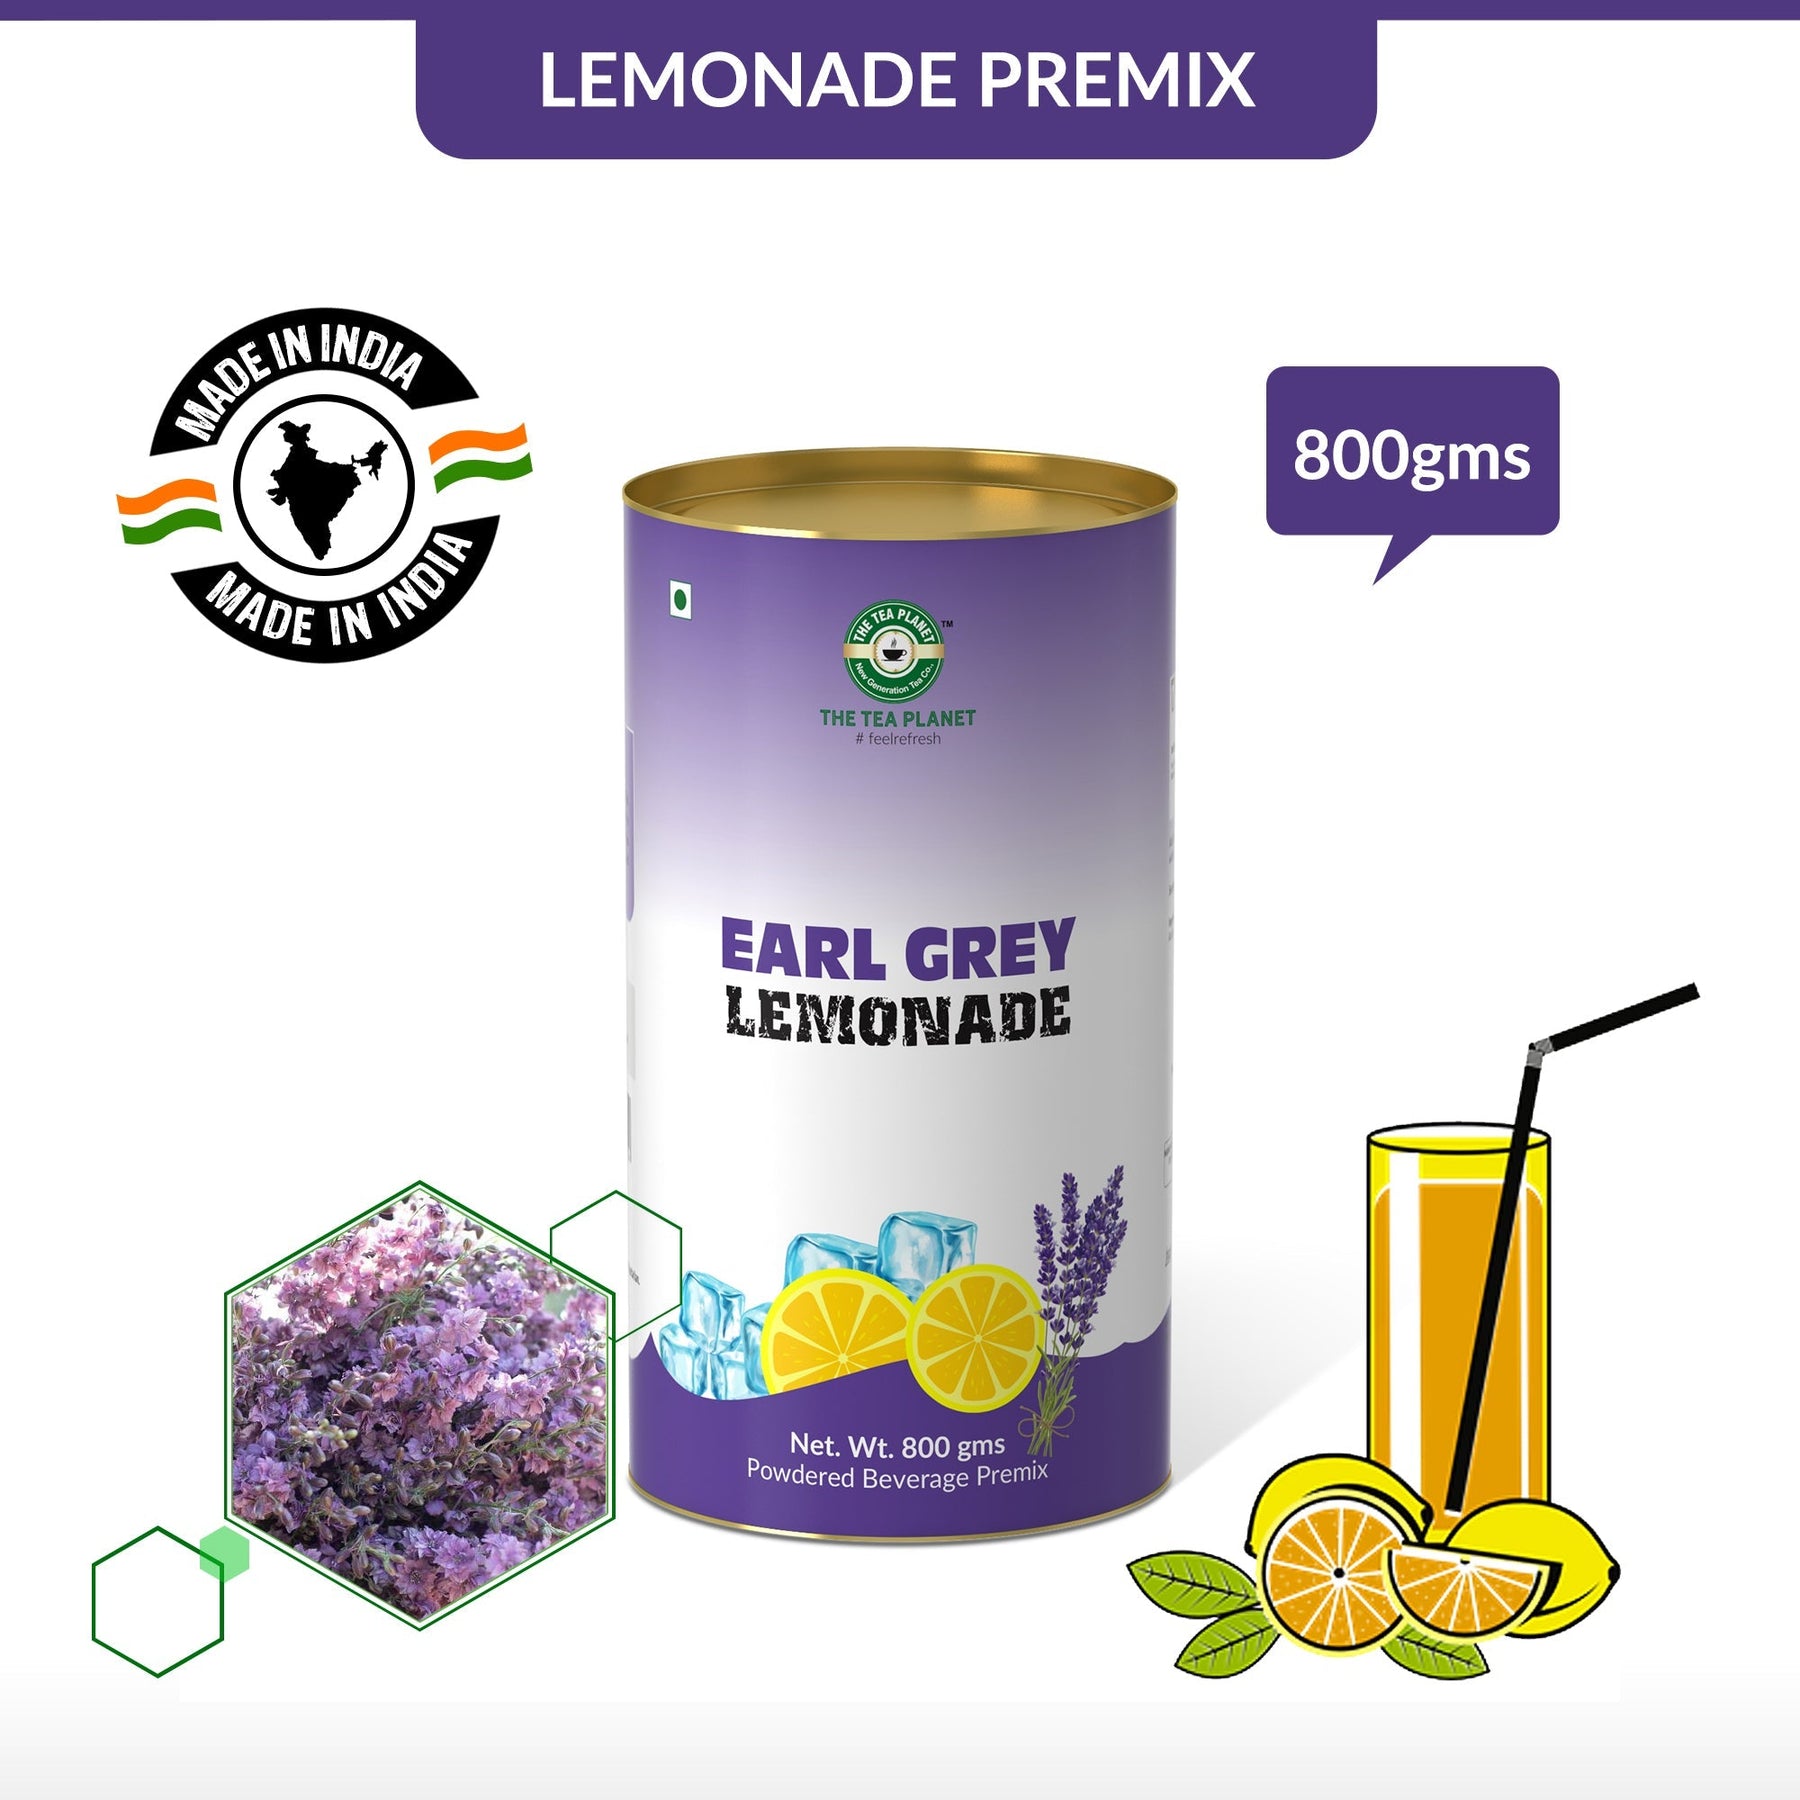 Earl Grey Lemonade Premix - 800 gms